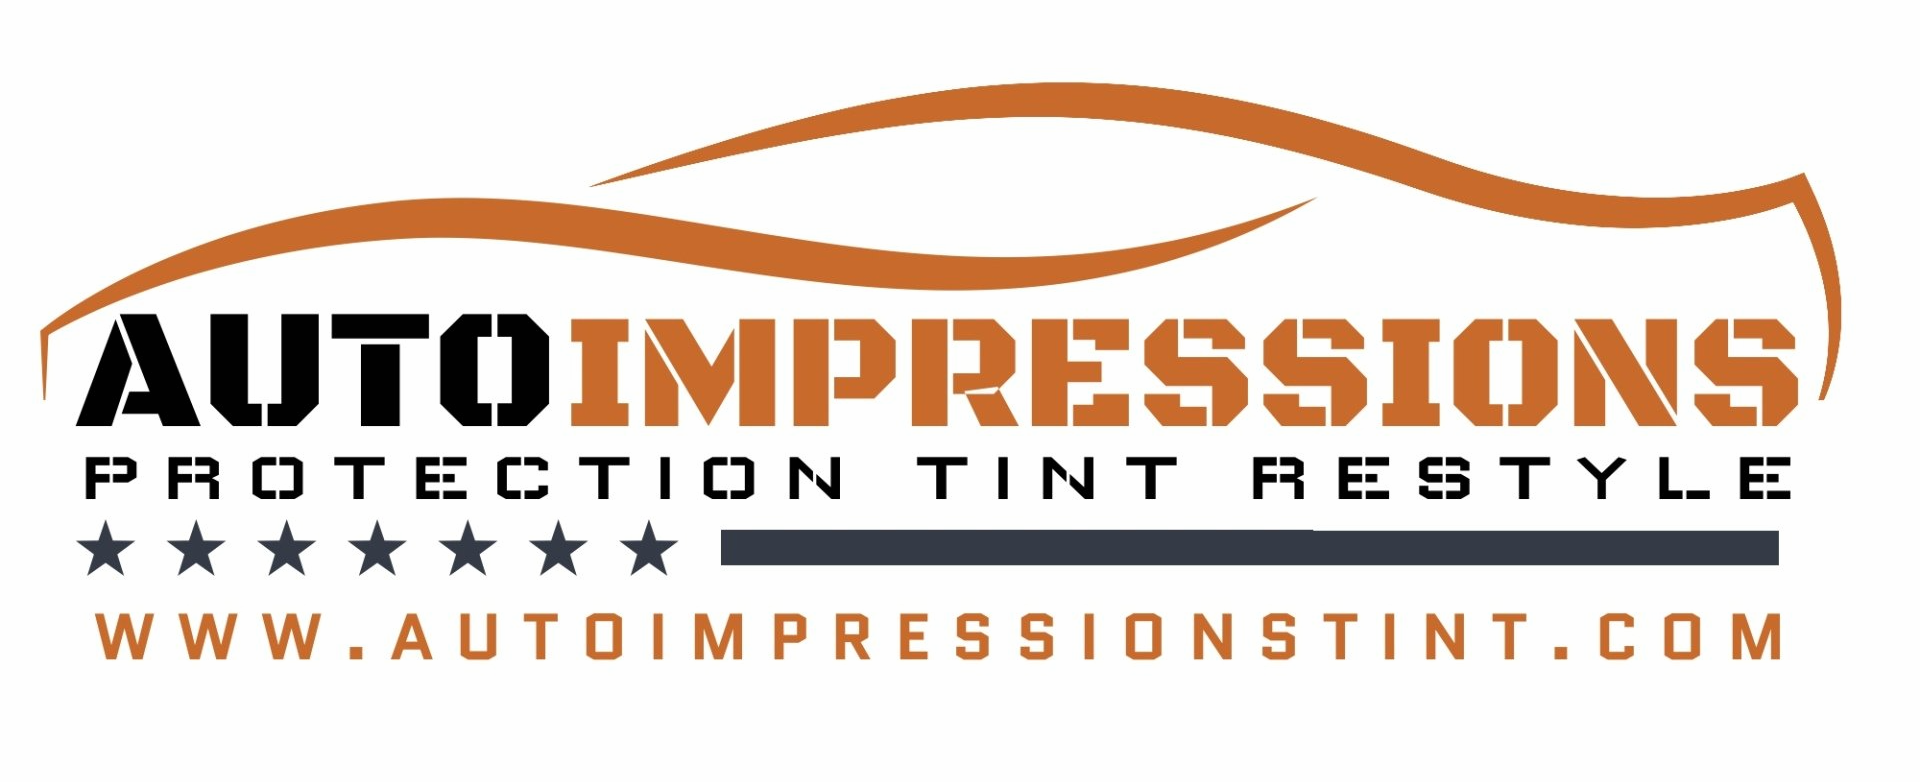 www.autoimpressionstint.com auto impressions tint logo